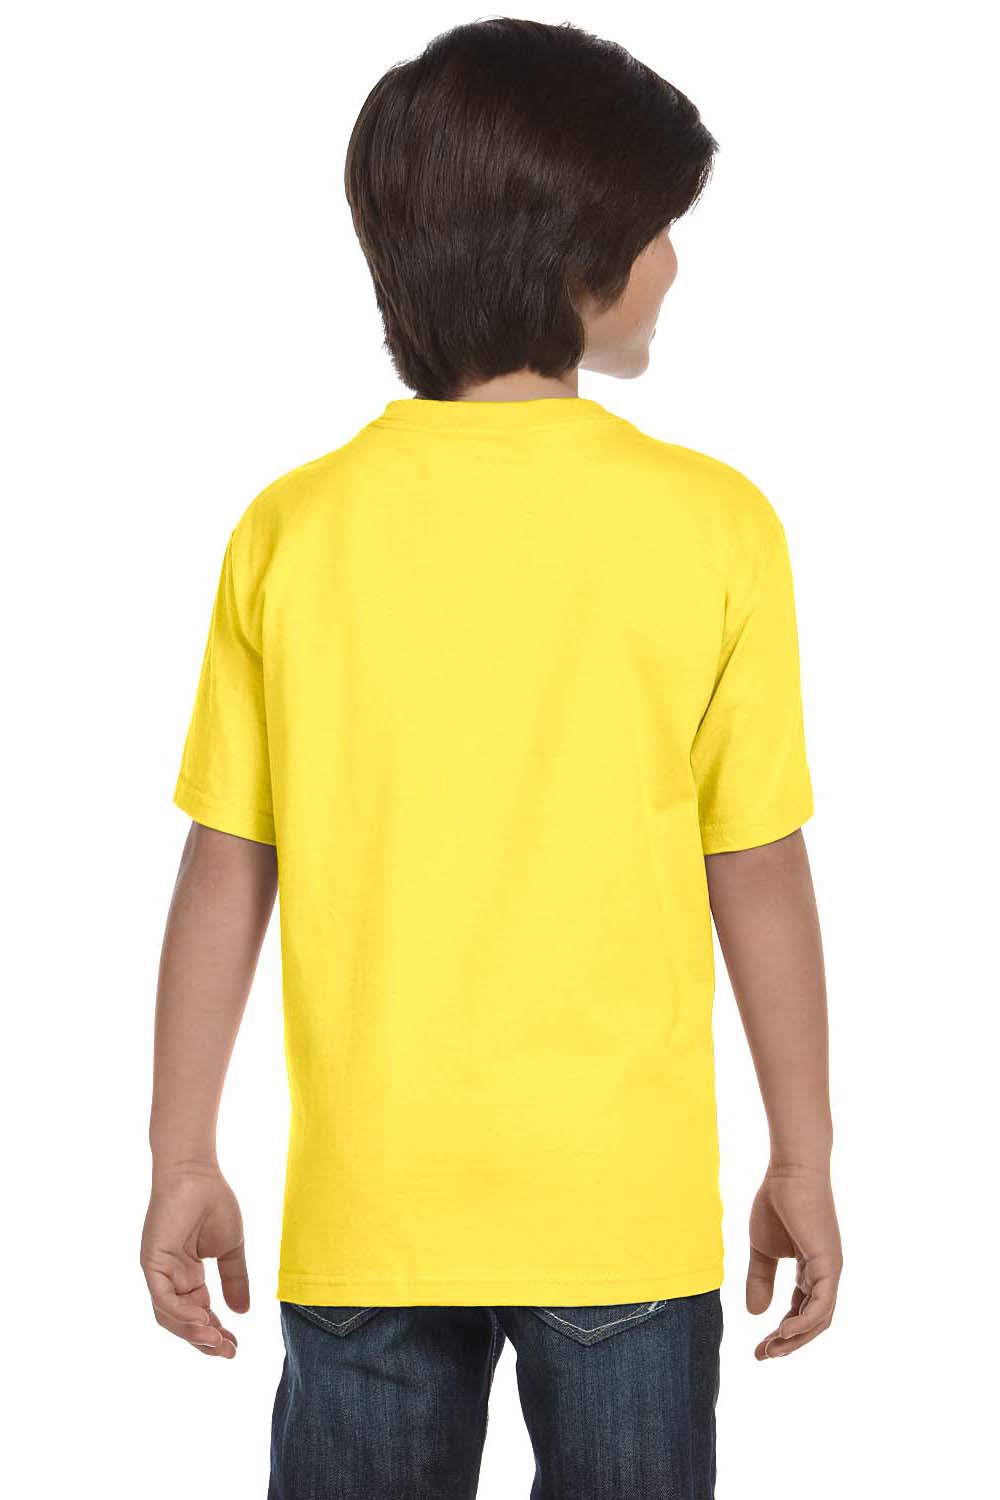 Hanes 5480 Youth ComfortSoft Short Sleeve Crewneck T-Shirt Yellow Back